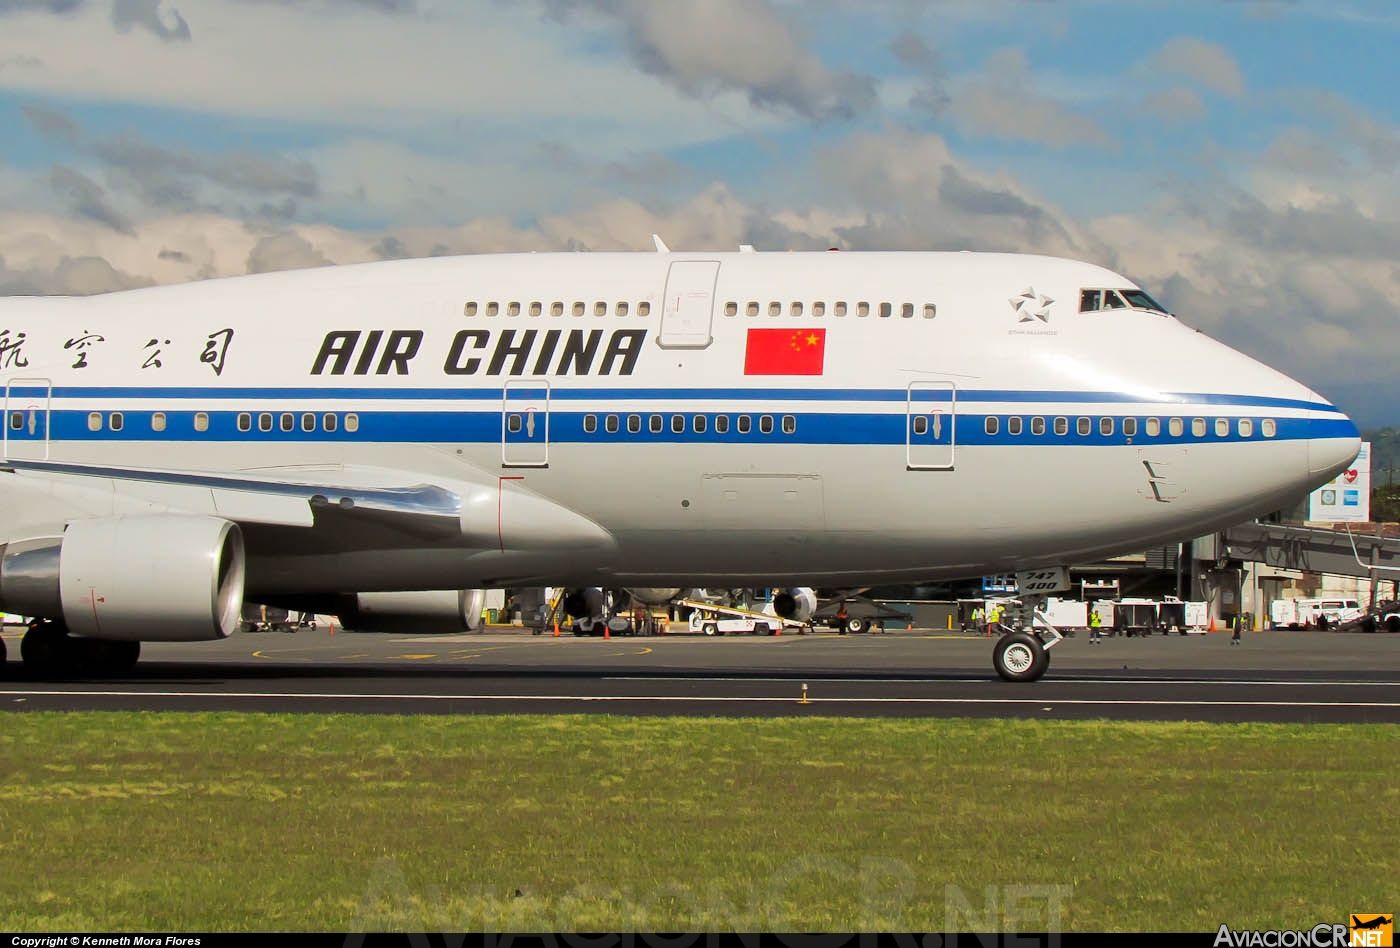 B-2472 - Boeing 747-4J6 - Air China